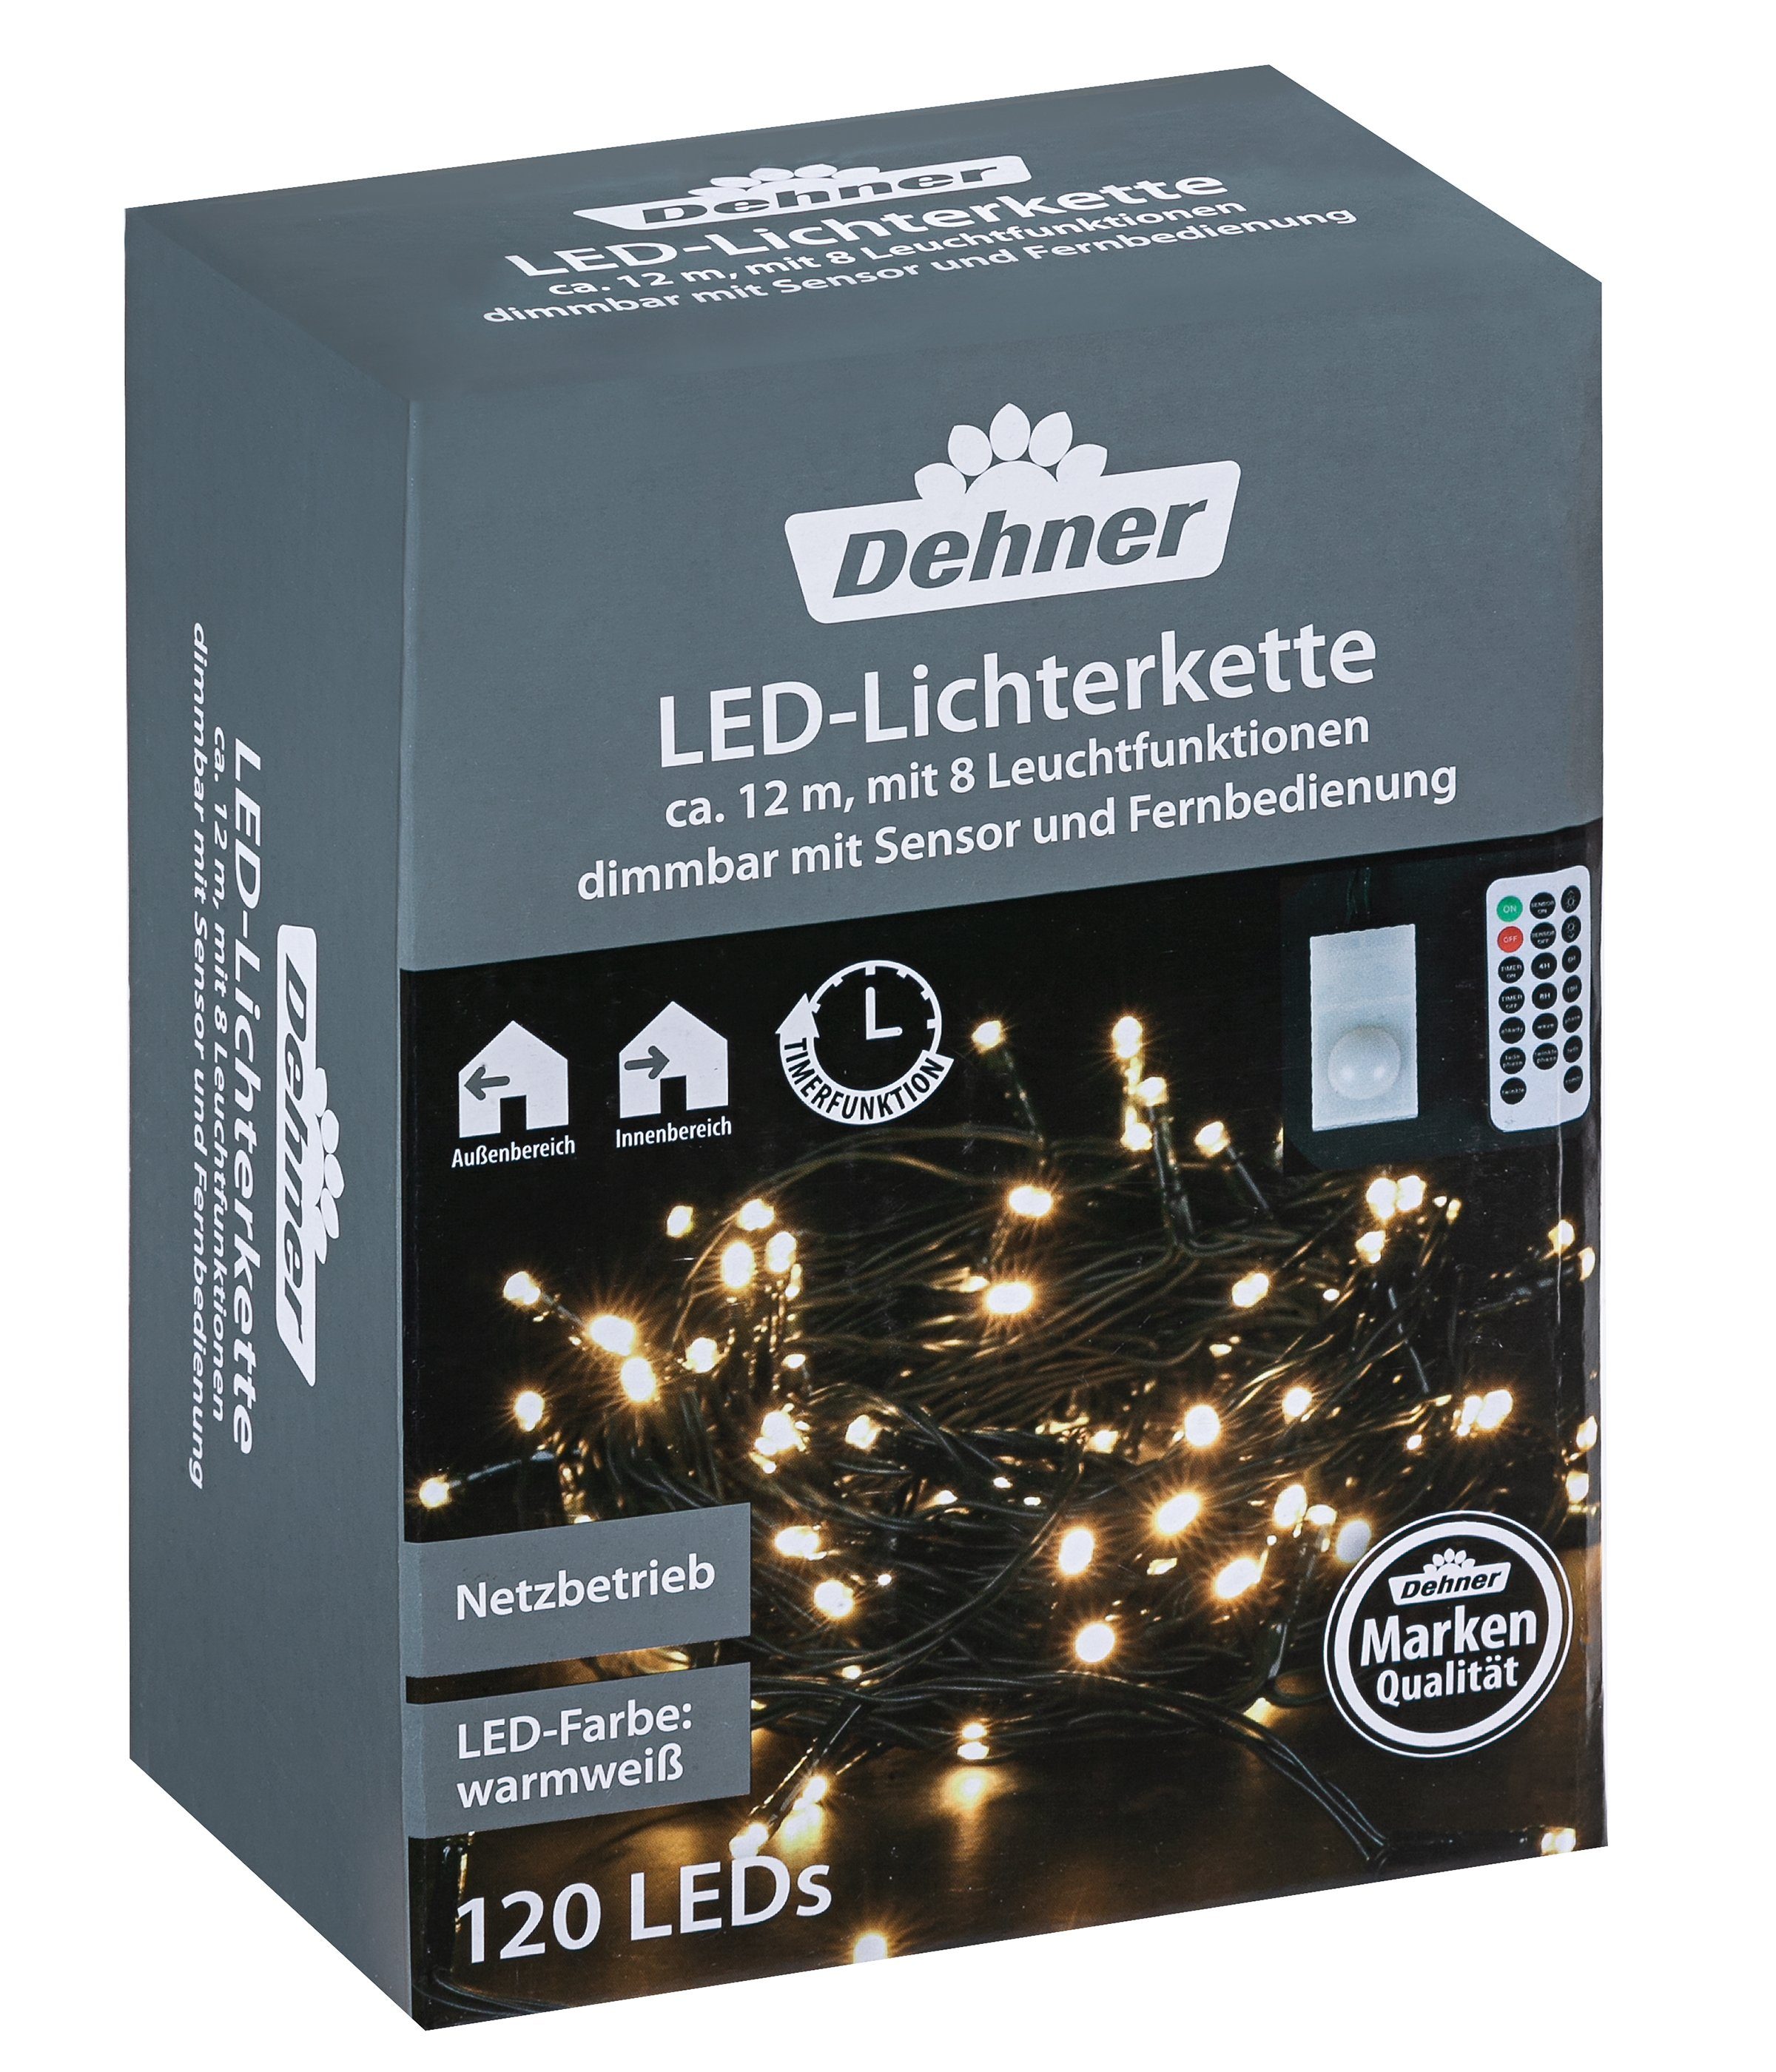 8 Timer, LEDs, 120 LED-Lichterkette LED-Lichterkette Sensor, Fernbedienung m, Indoor/Outdoor, Dehner wetterfest, mit Länge Modi, 12 dimmbar,